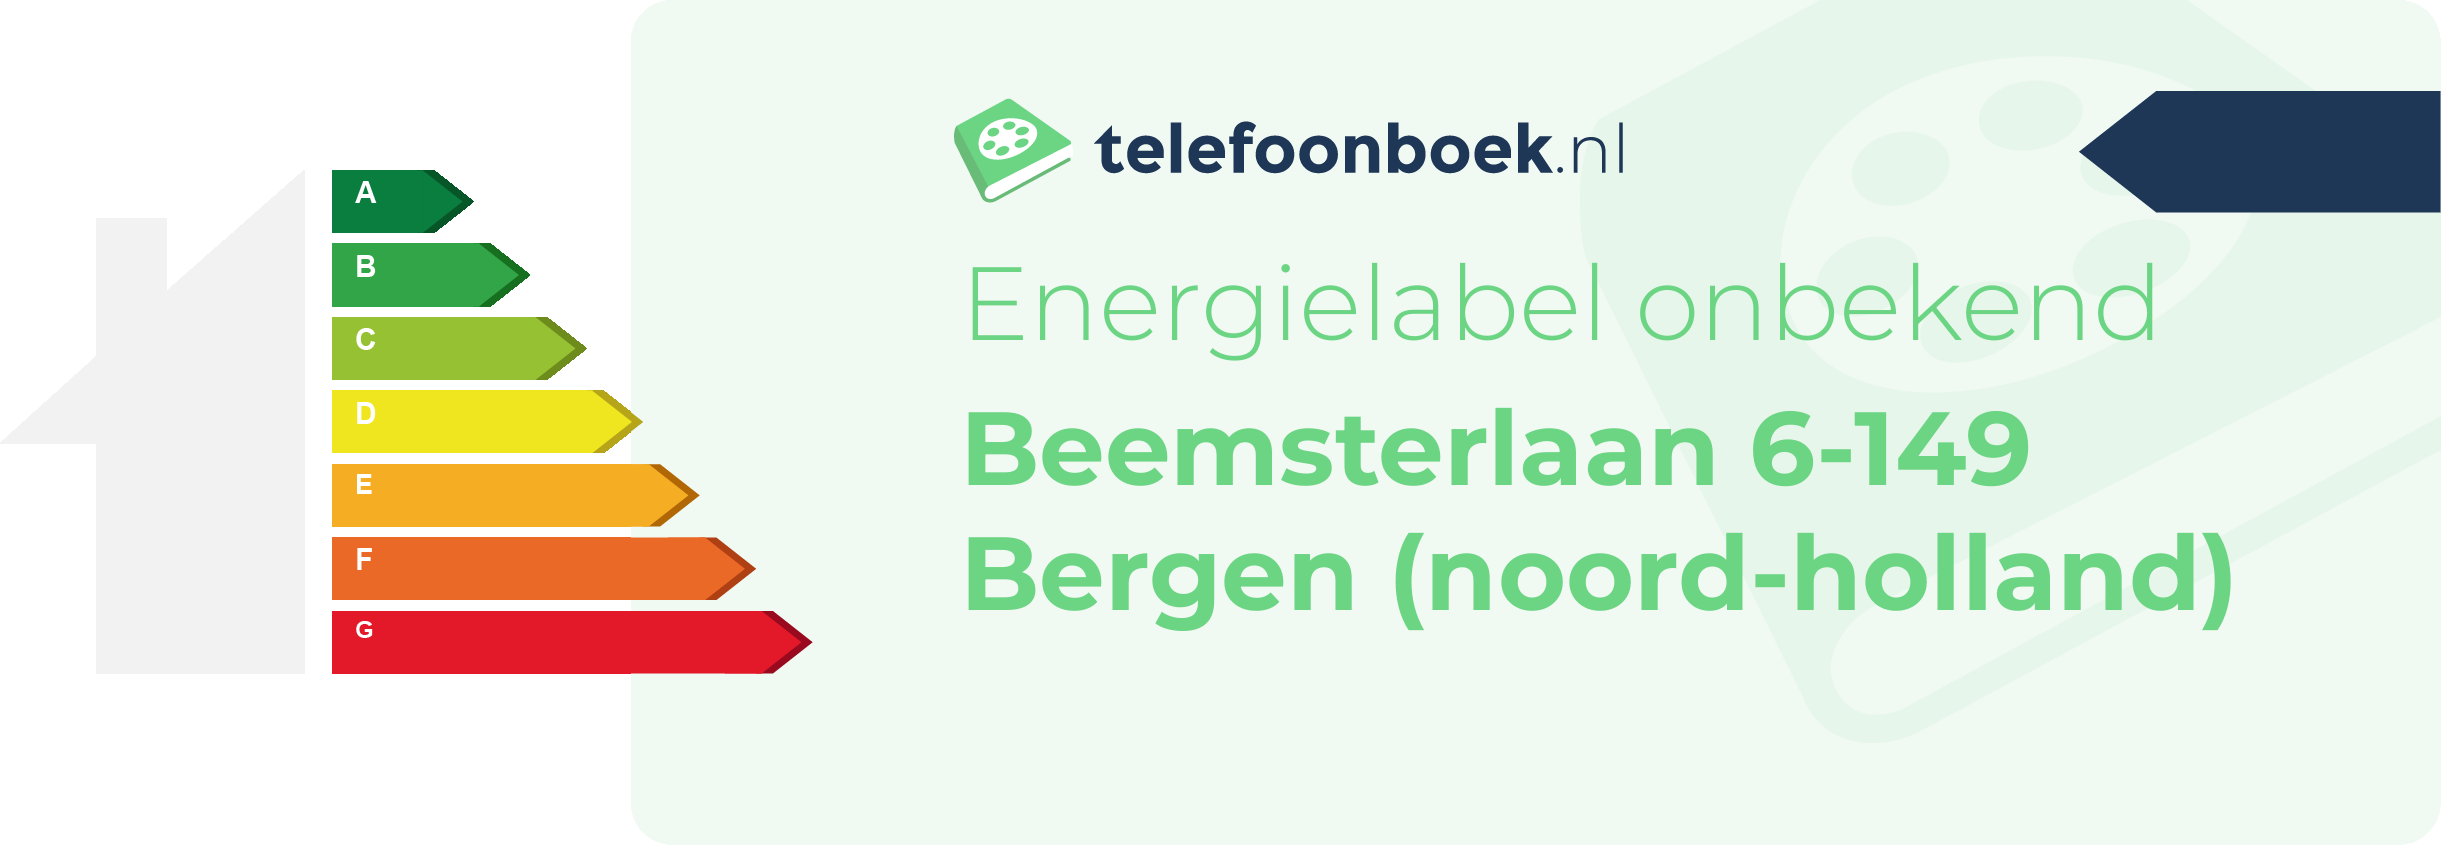 Energielabel Beemsterlaan 6-149 Bergen (Noord-Holland)